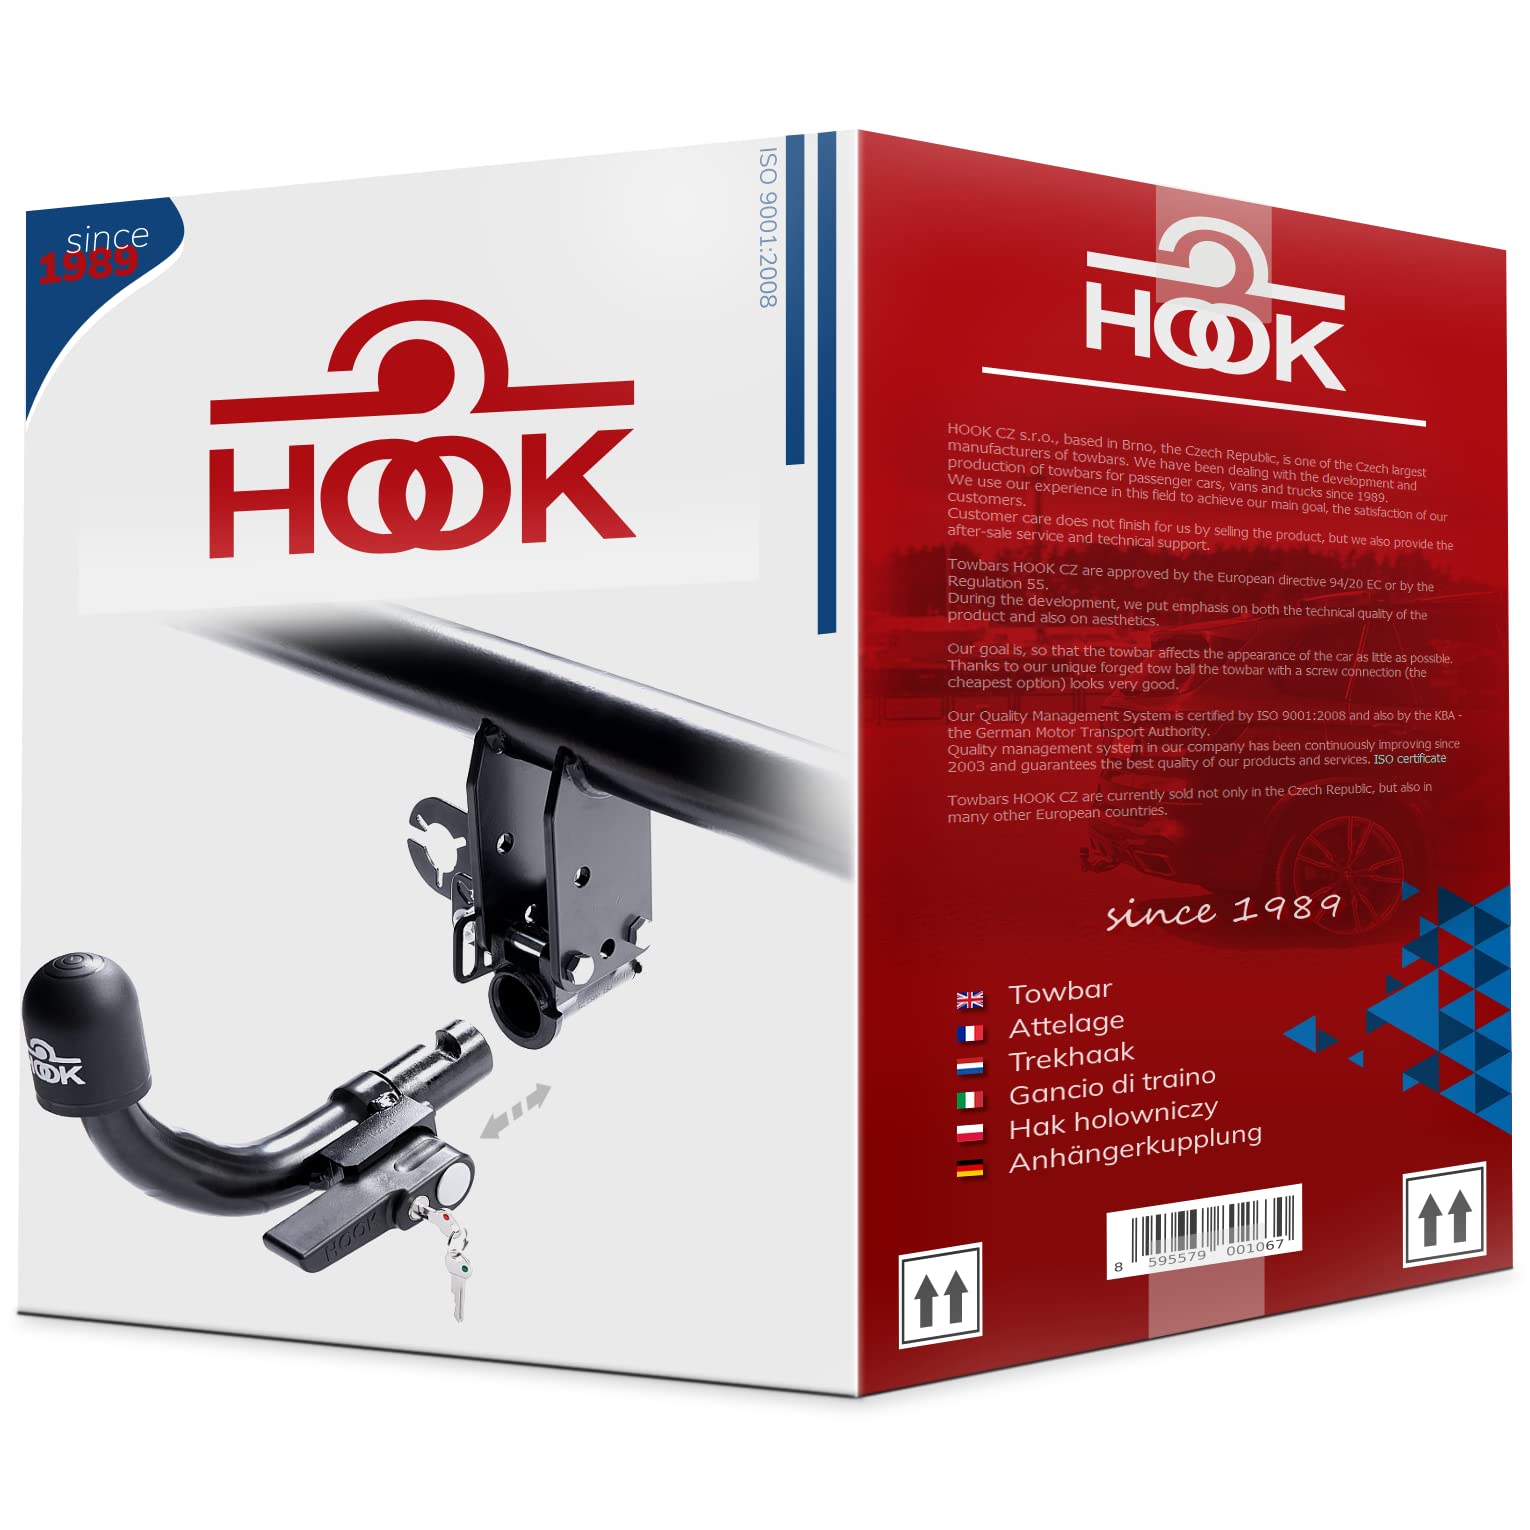 Hook horizontal abnehmbare AHK Anhängerkupplung für Hyundai ix35 I 2010-2015 + universell Elektrosatz 13-polig, 190101@WH2SG13 von Hook